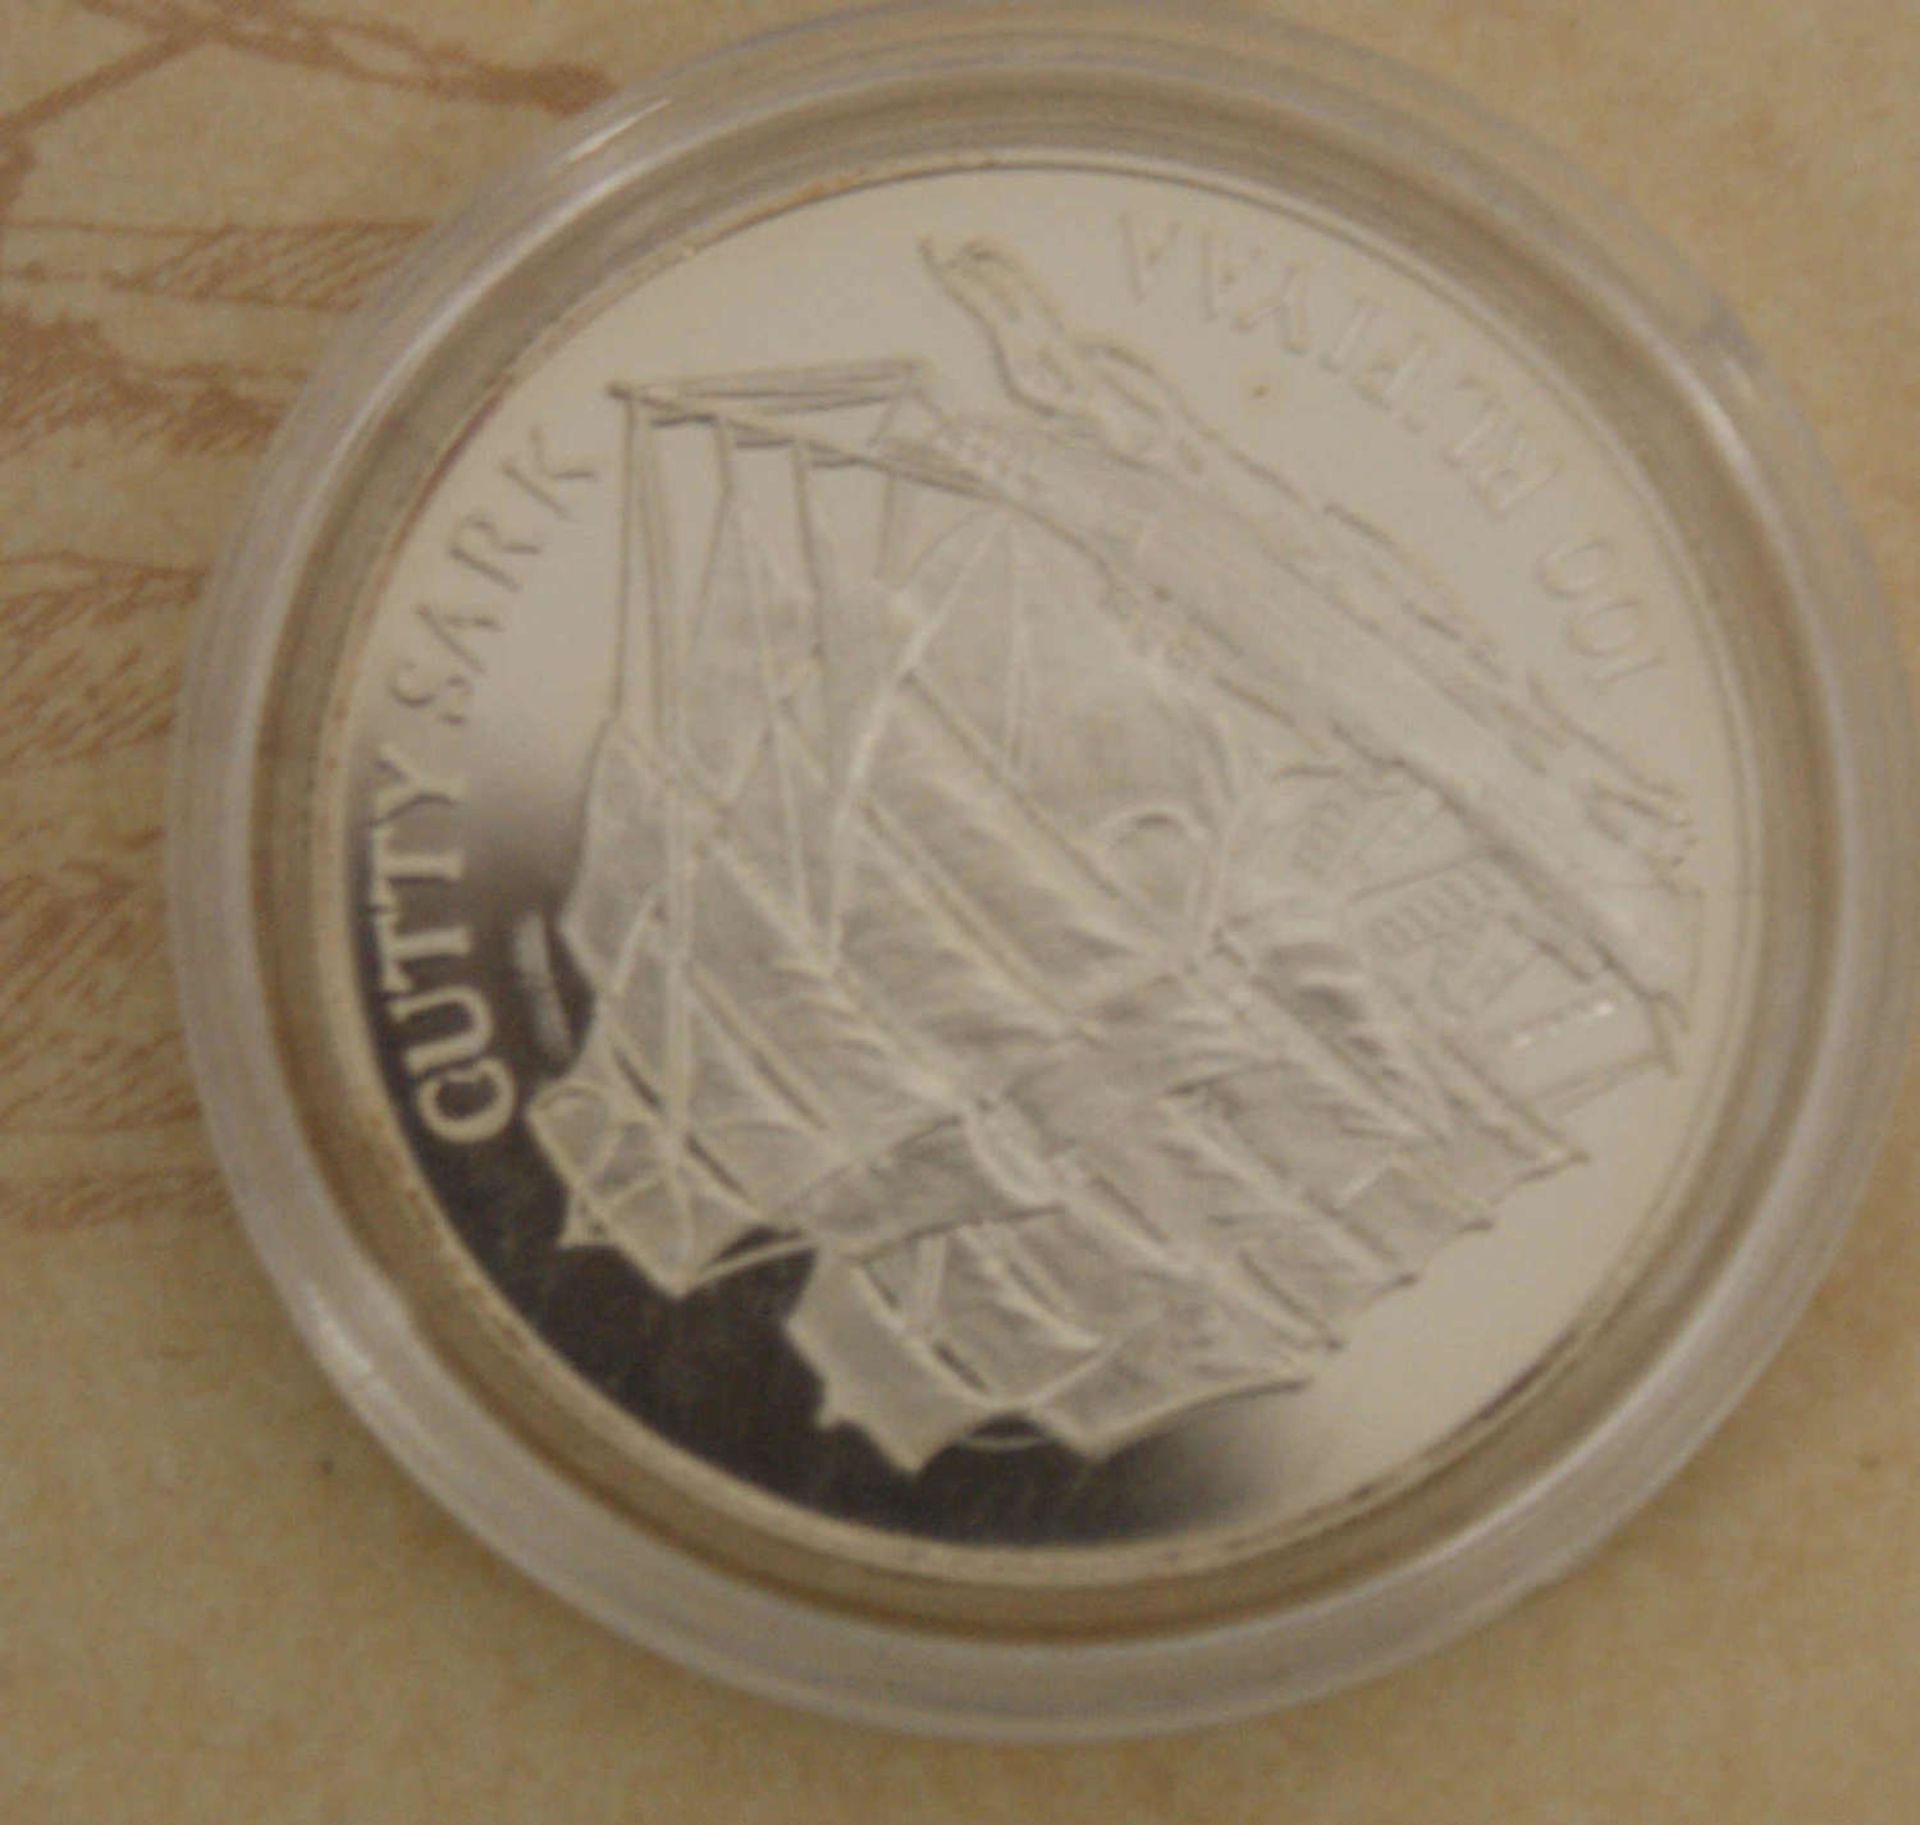 Malediven 1993, 100 Rufiyaa - Silbermünze "Cutty Sark", Silber 500, Gewicht: 10 g, Durchmesser: 30 - Image 3 of 3